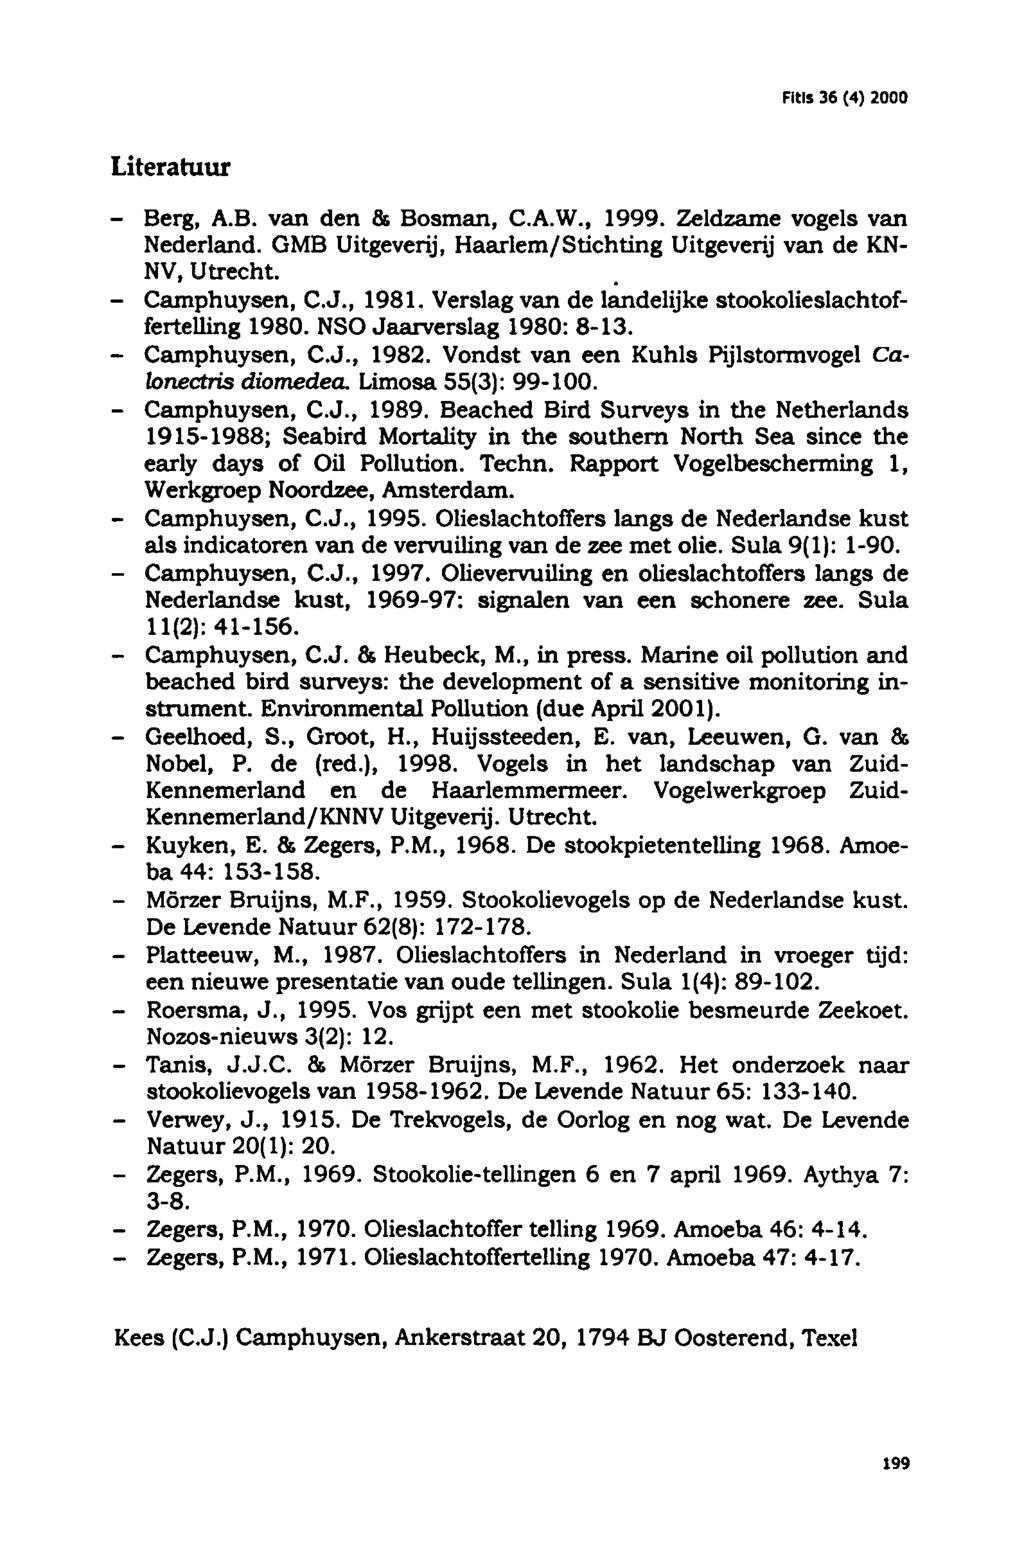 Camphuysen, Camphuysen, Camphuysen, Camphuysen, Kuyken, Mörzer Platteeuw, Roersma, Tanis, Zegers, Zegers, Fitls 36 (4) 2000 Literatuur Berg, A.B. van den & Bosman, C.A.W., 1999.